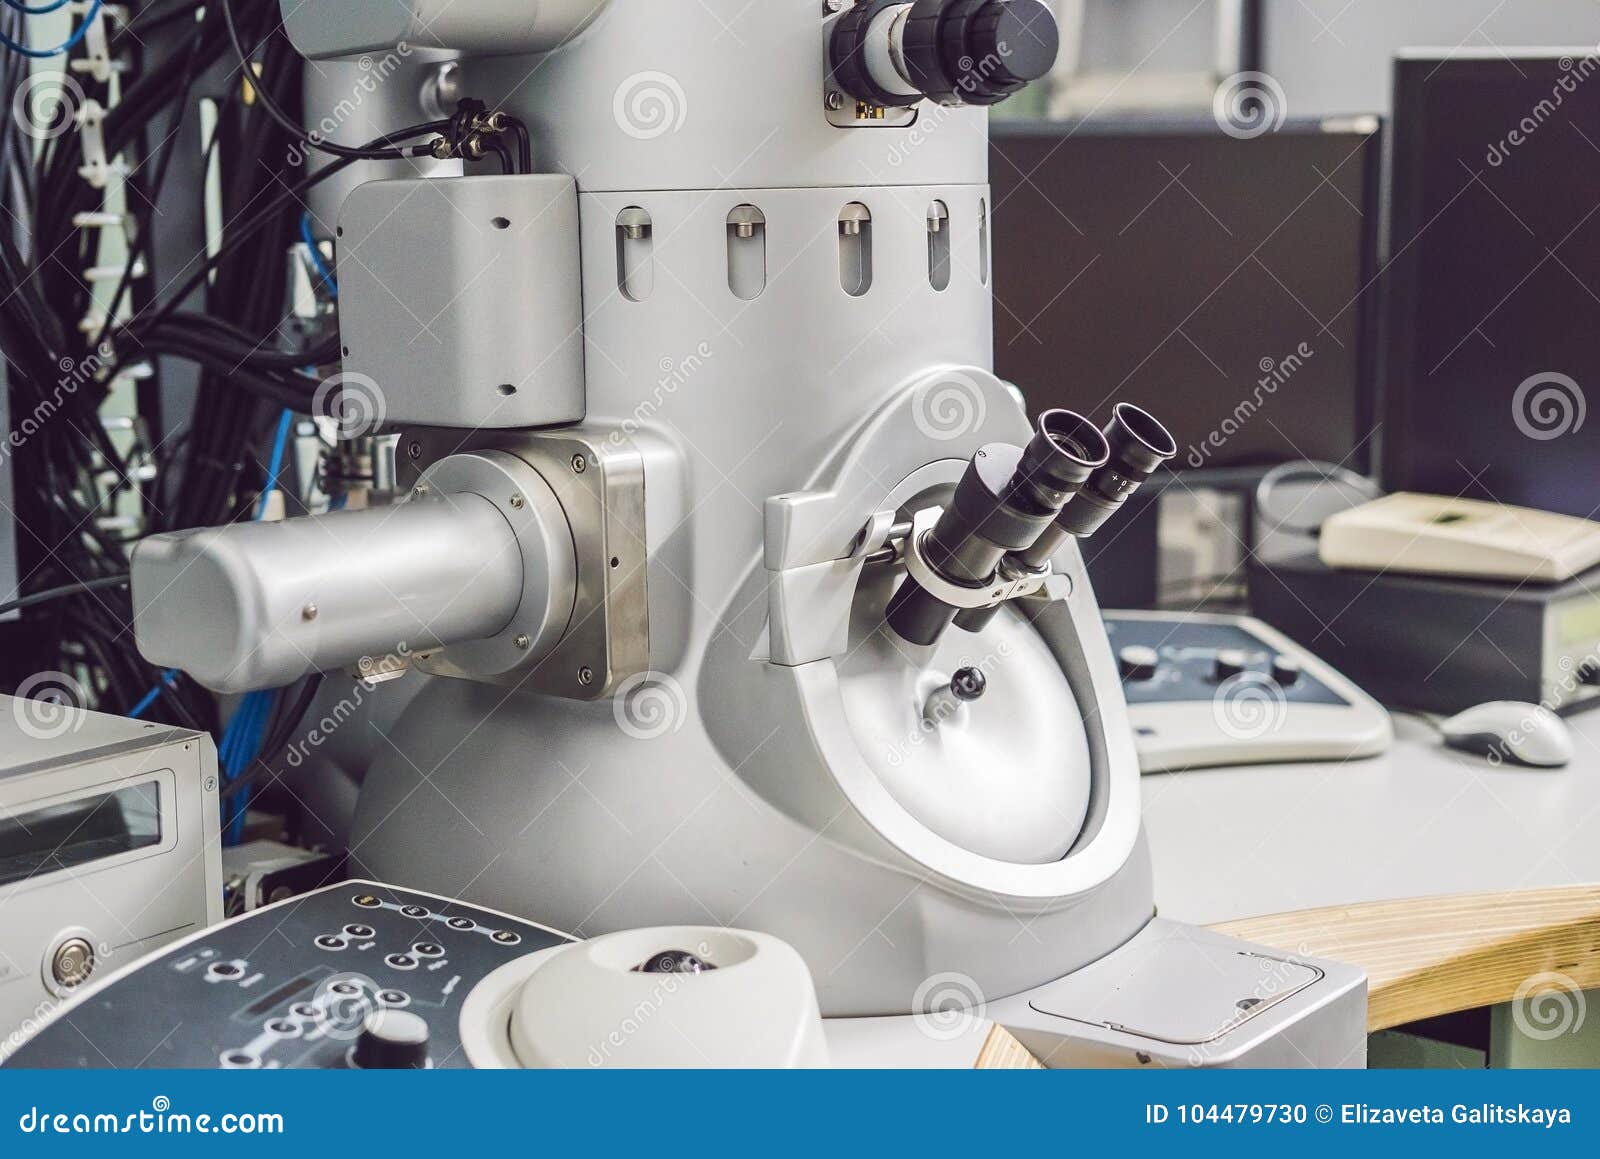 transmission electron microscope in a scientific laboratory